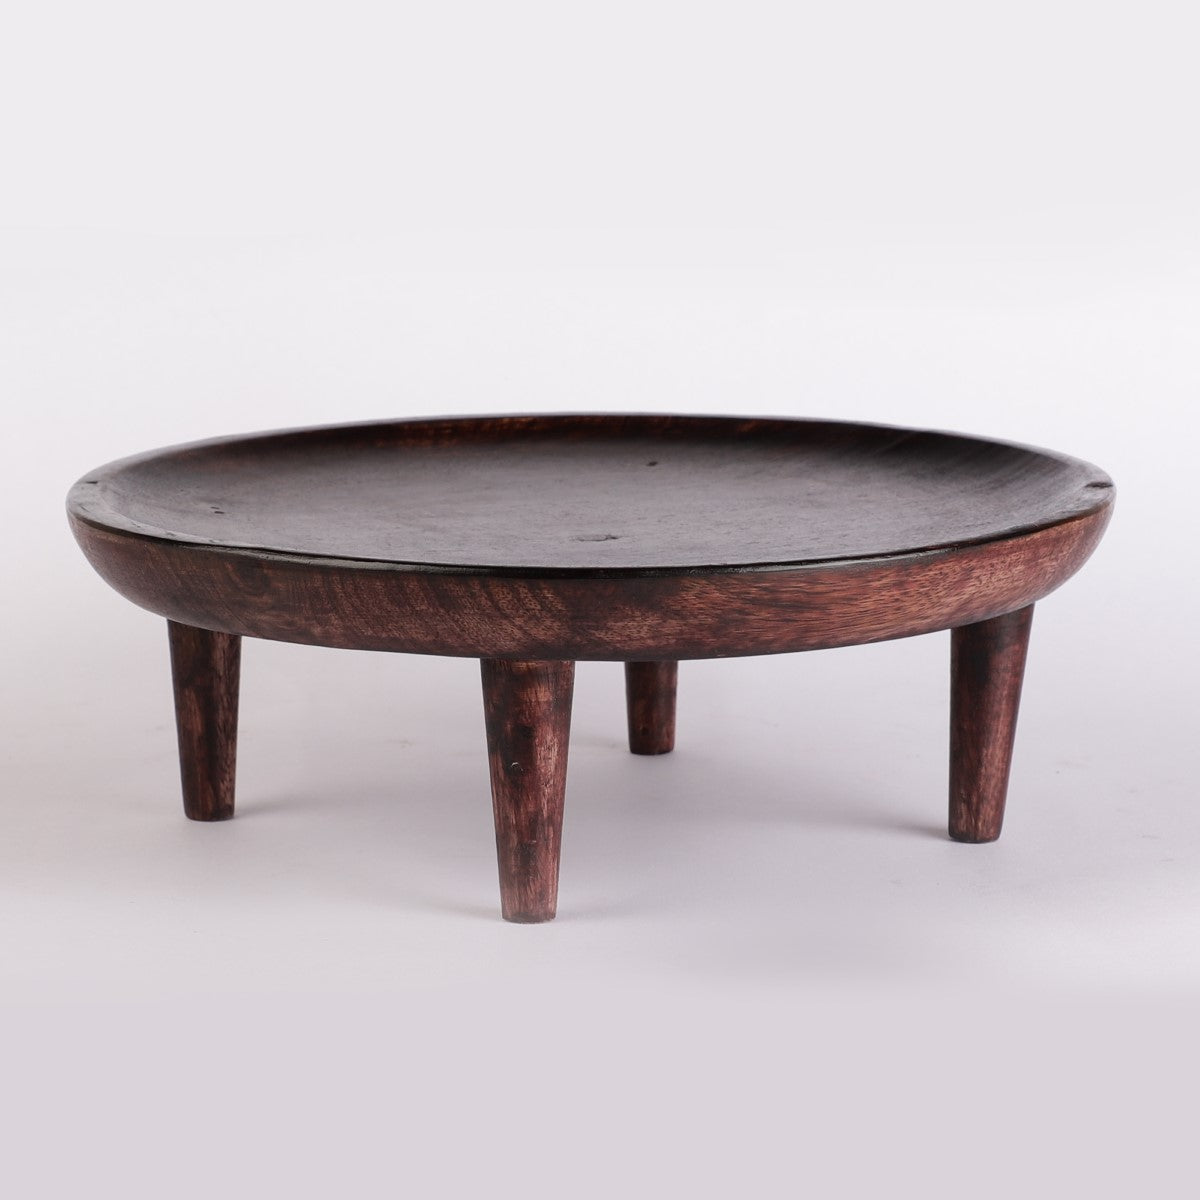 Round Wooden Platter with Legs